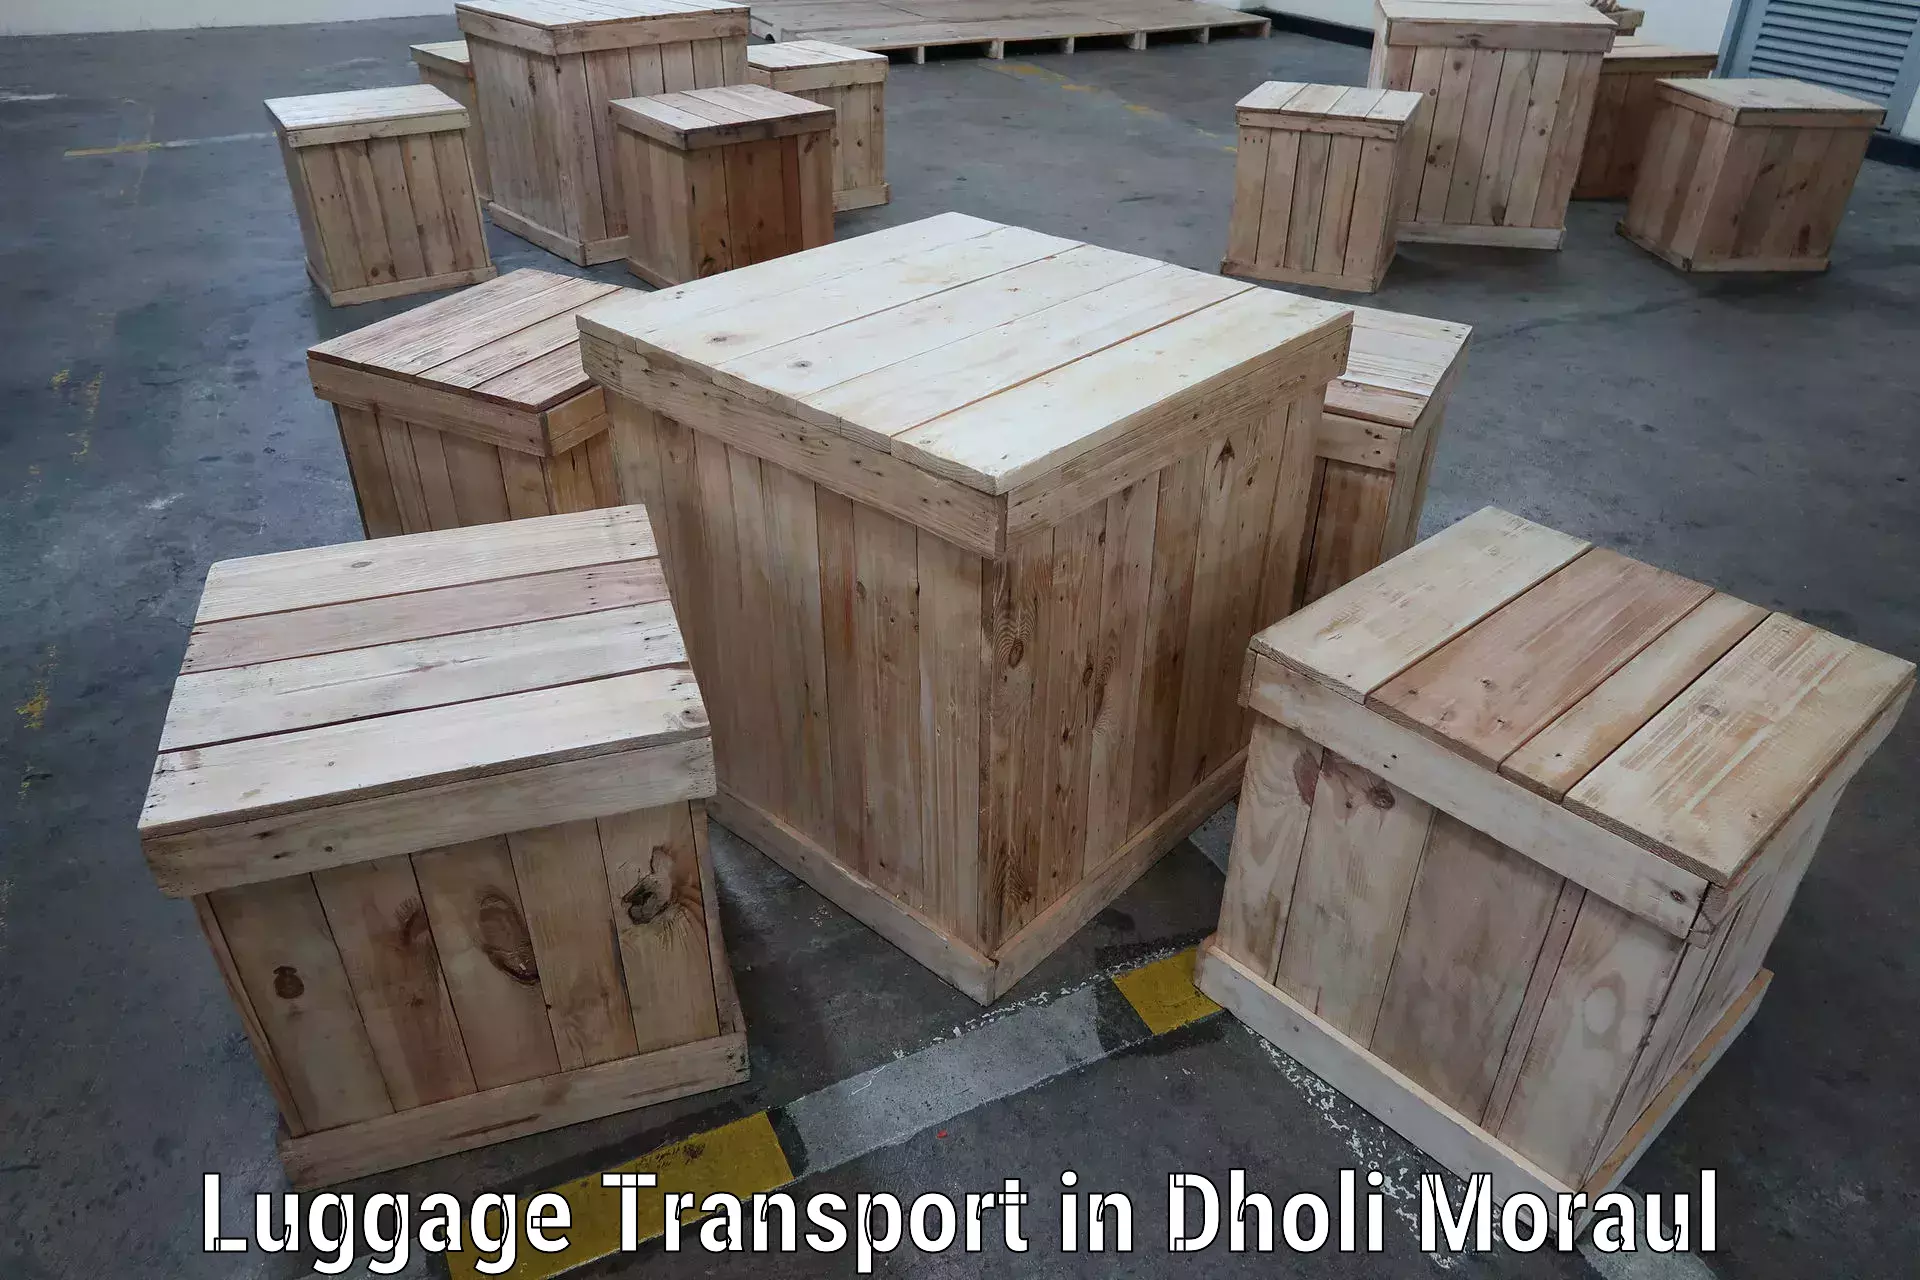 Luggage transit service in Dholi Moraul